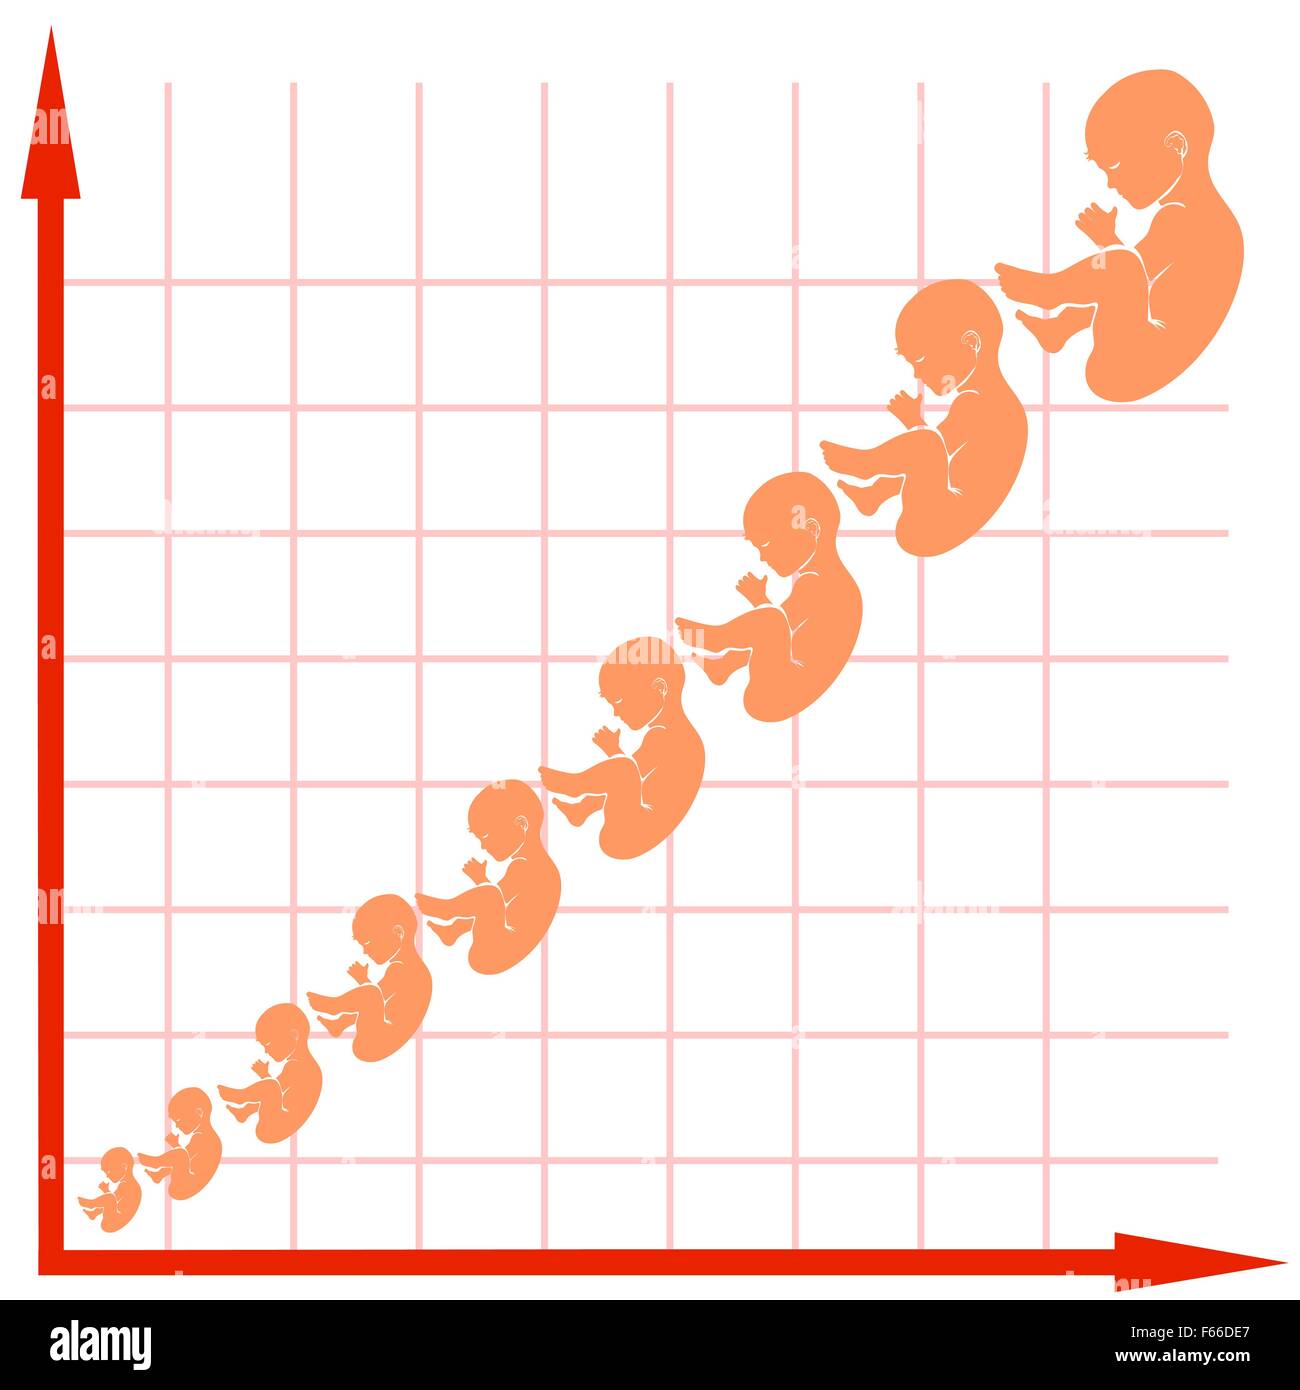 Pregnancy Growth Chart Week By Week